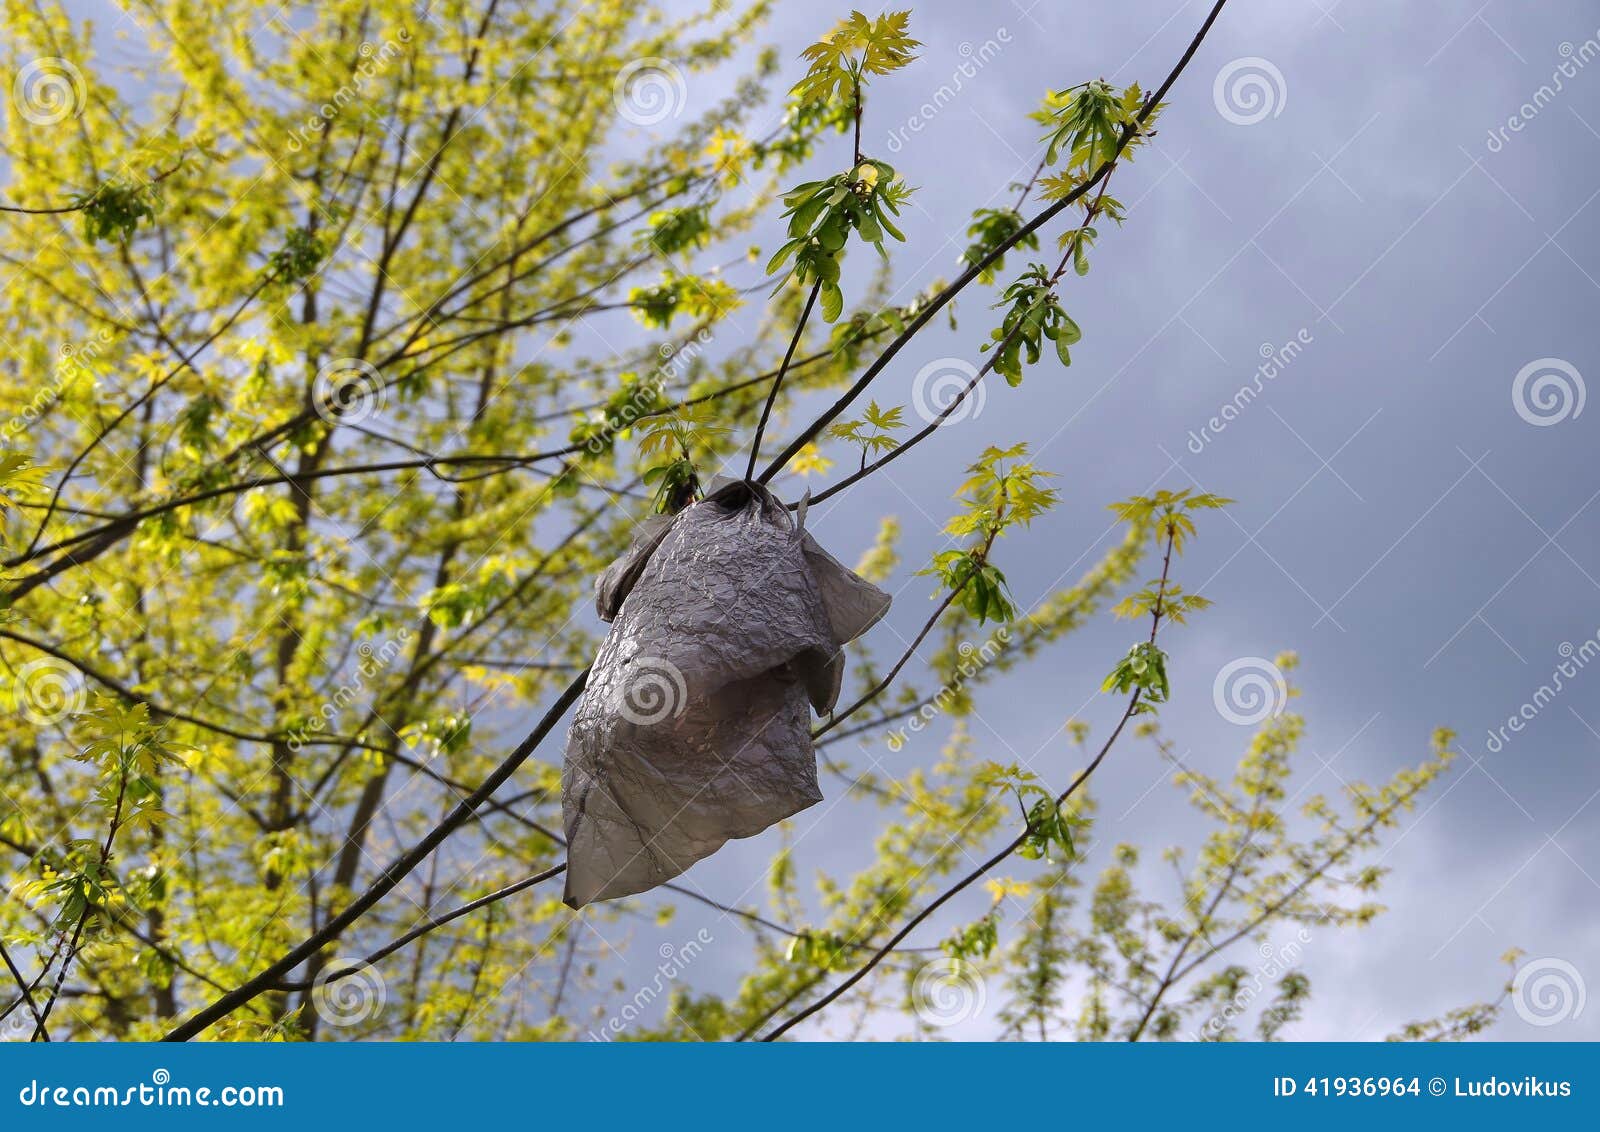 https://thumbs.dreamstime.com/z/plastic-bag-tree-nature-pollution-bags-trees-41936964.jpg